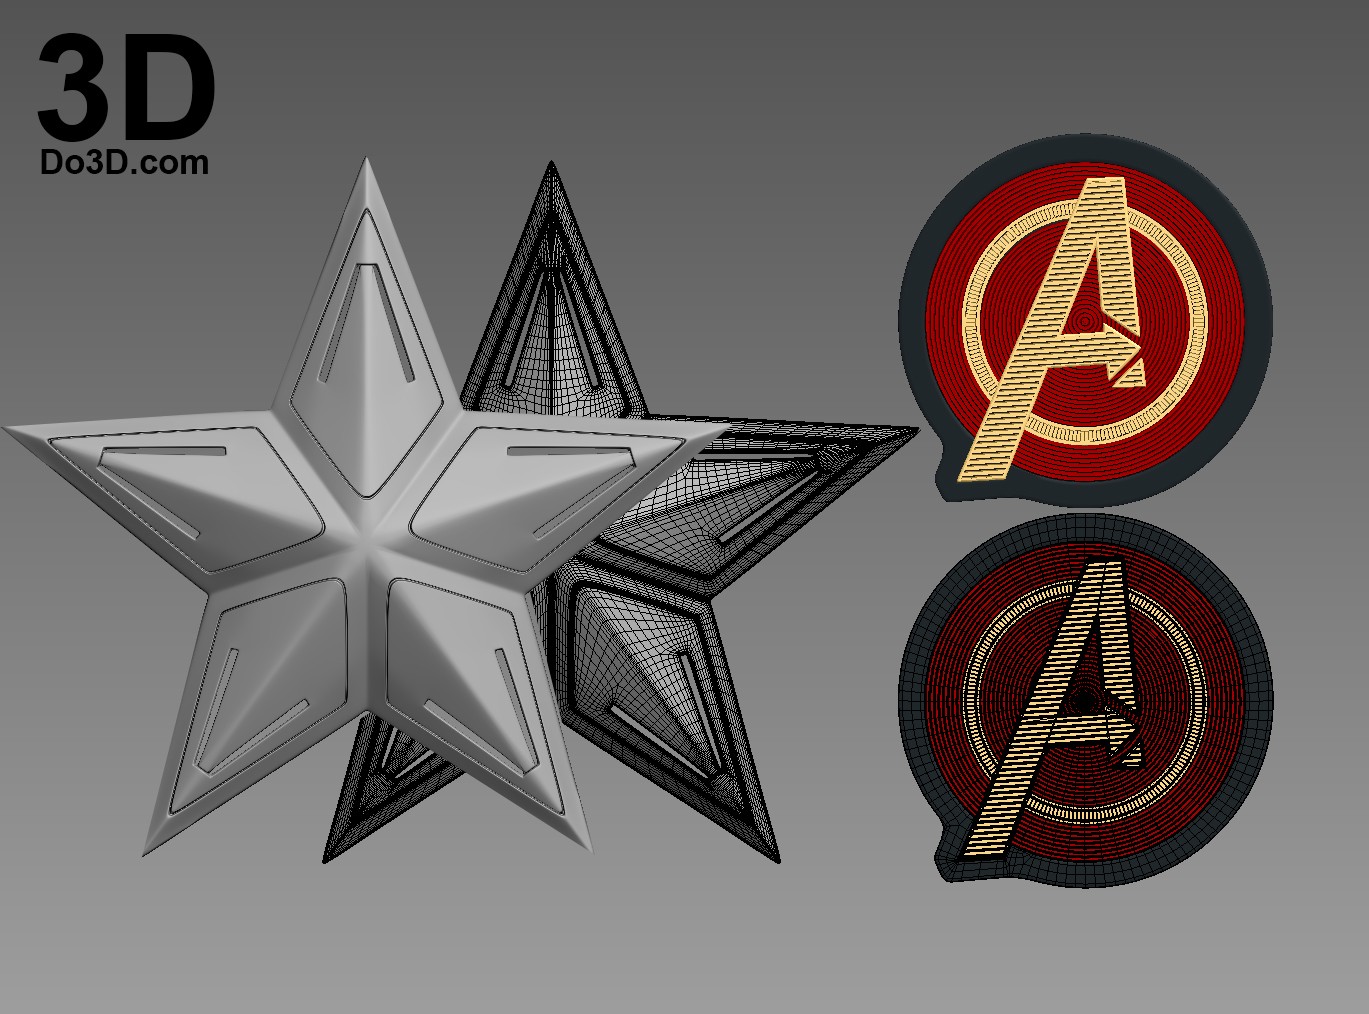 3D Printable Model: Shoulder Armor, Chest Star Piece And Avengers Logo  Emblem from Captain America Civil War| Print File Format: STL – Do3D  Portfolio